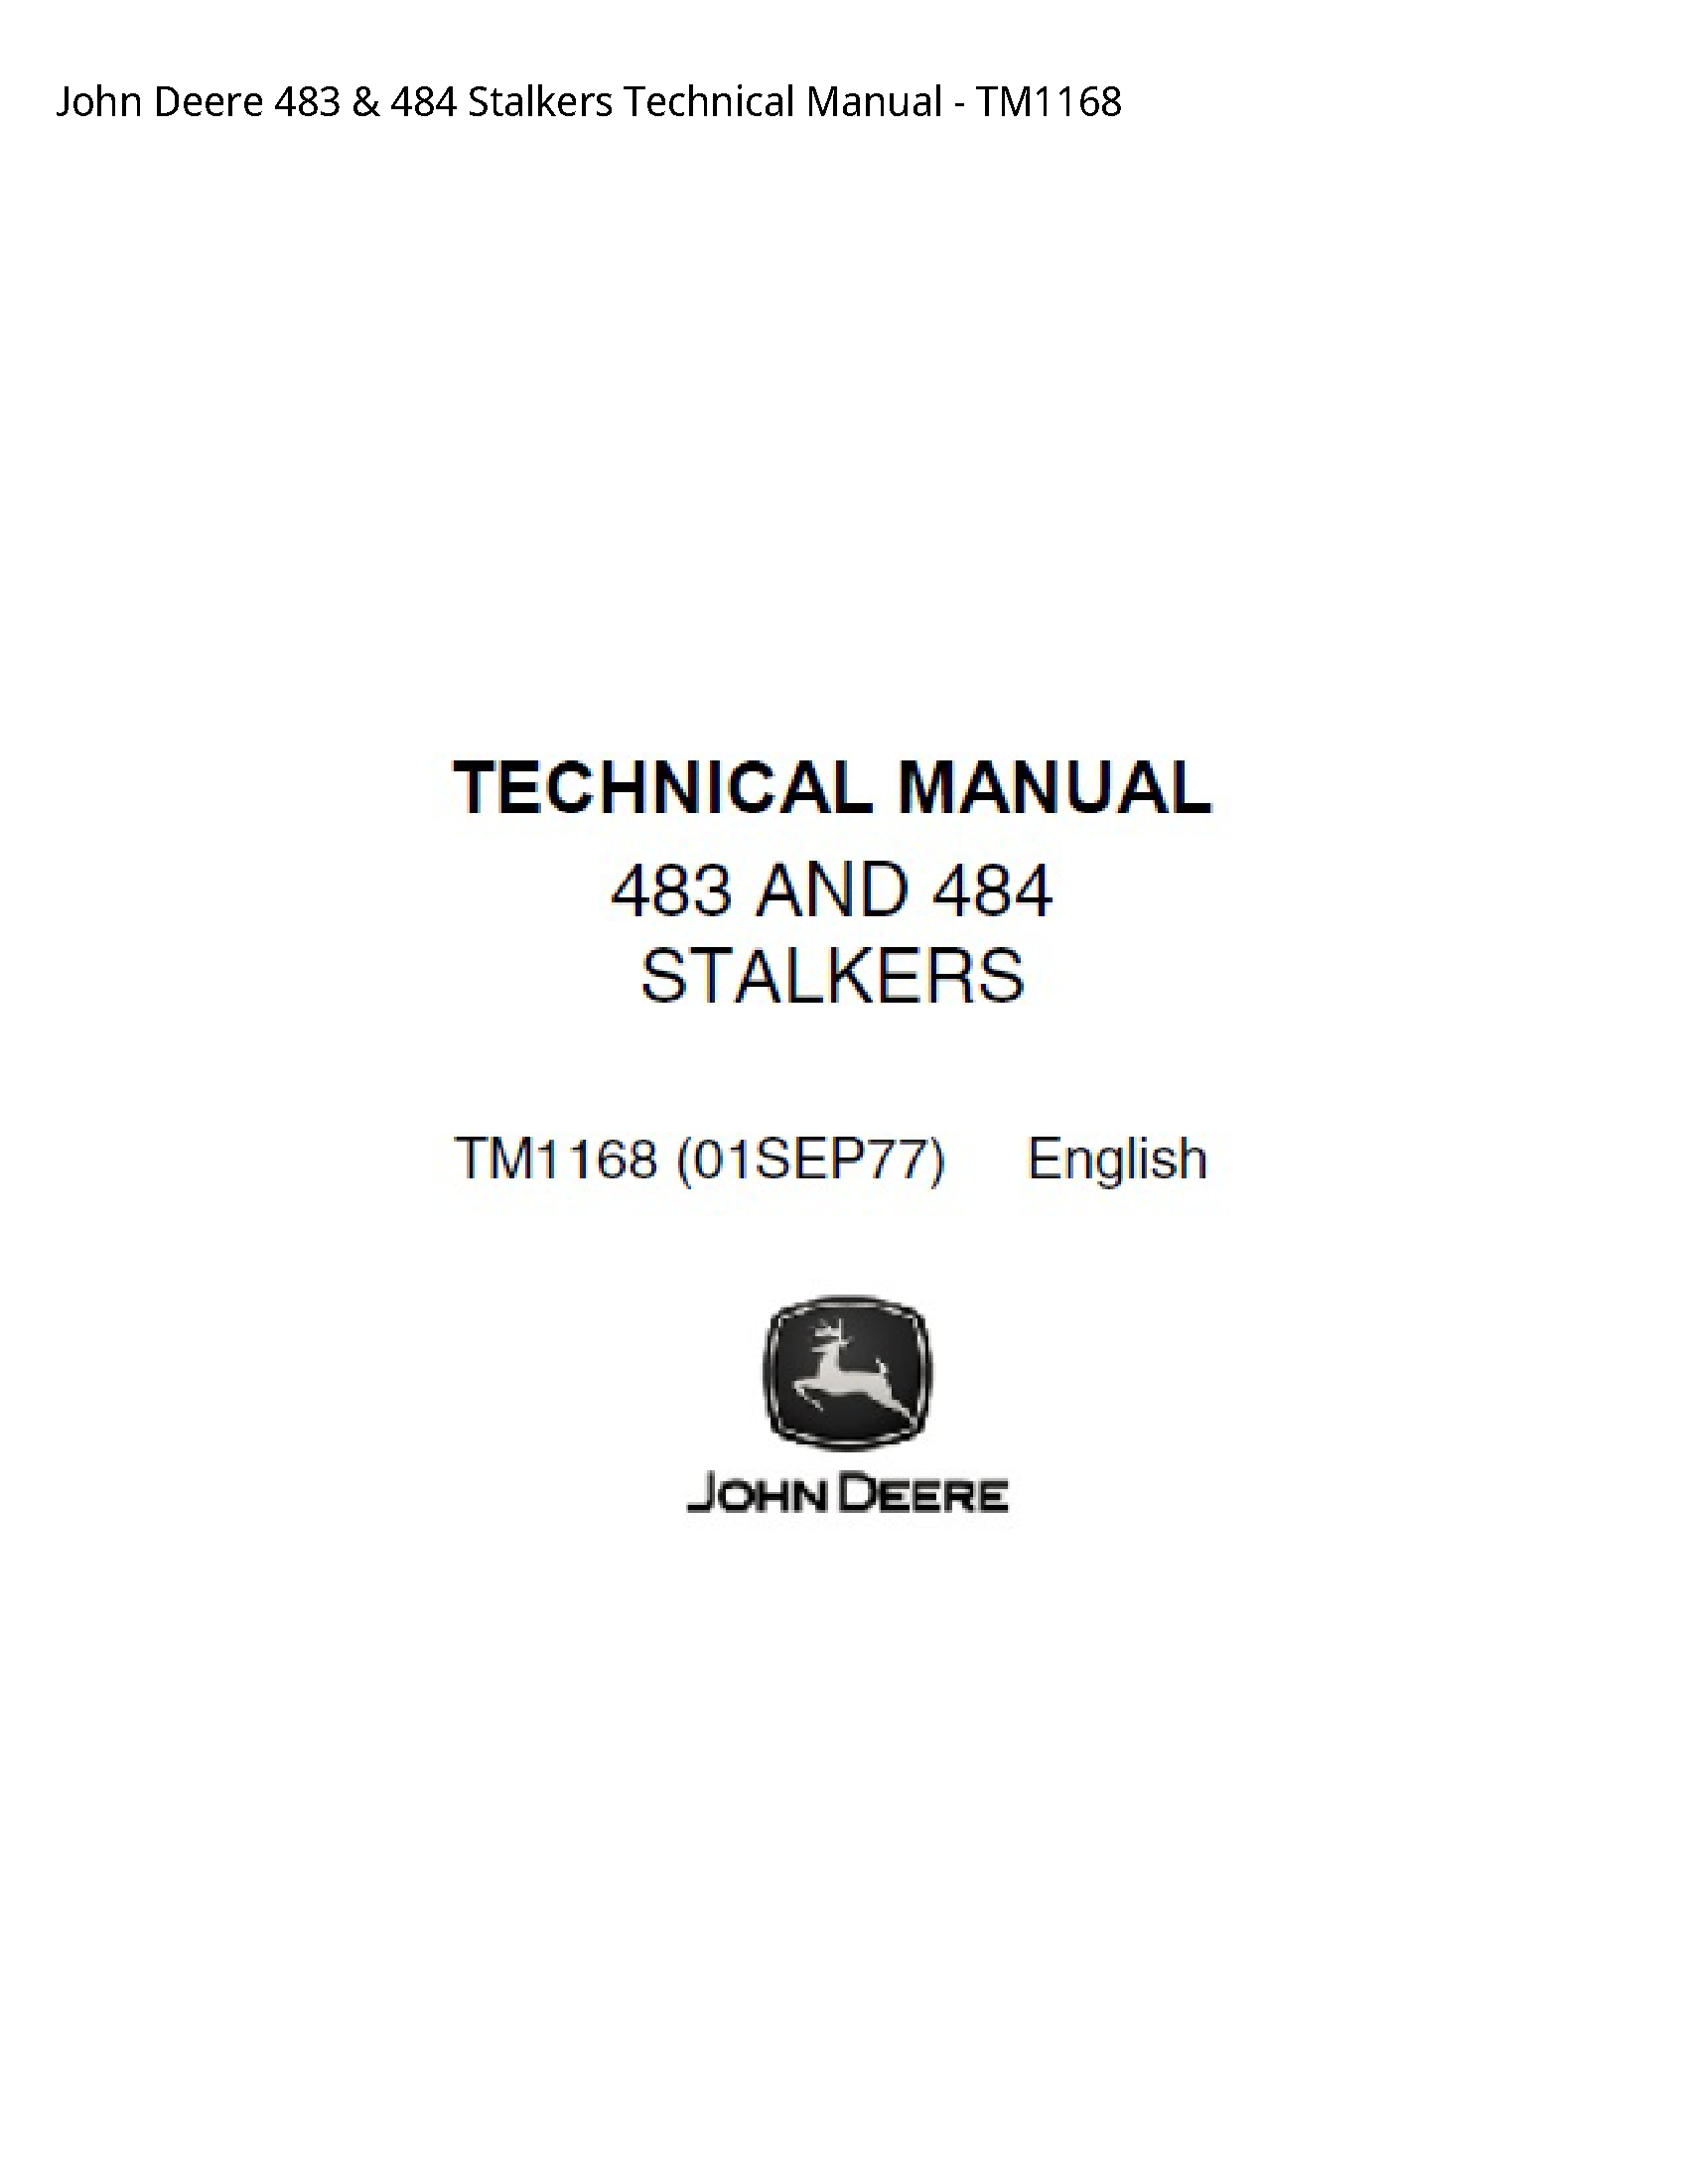 John Deere 483 Stalkers Technical manual